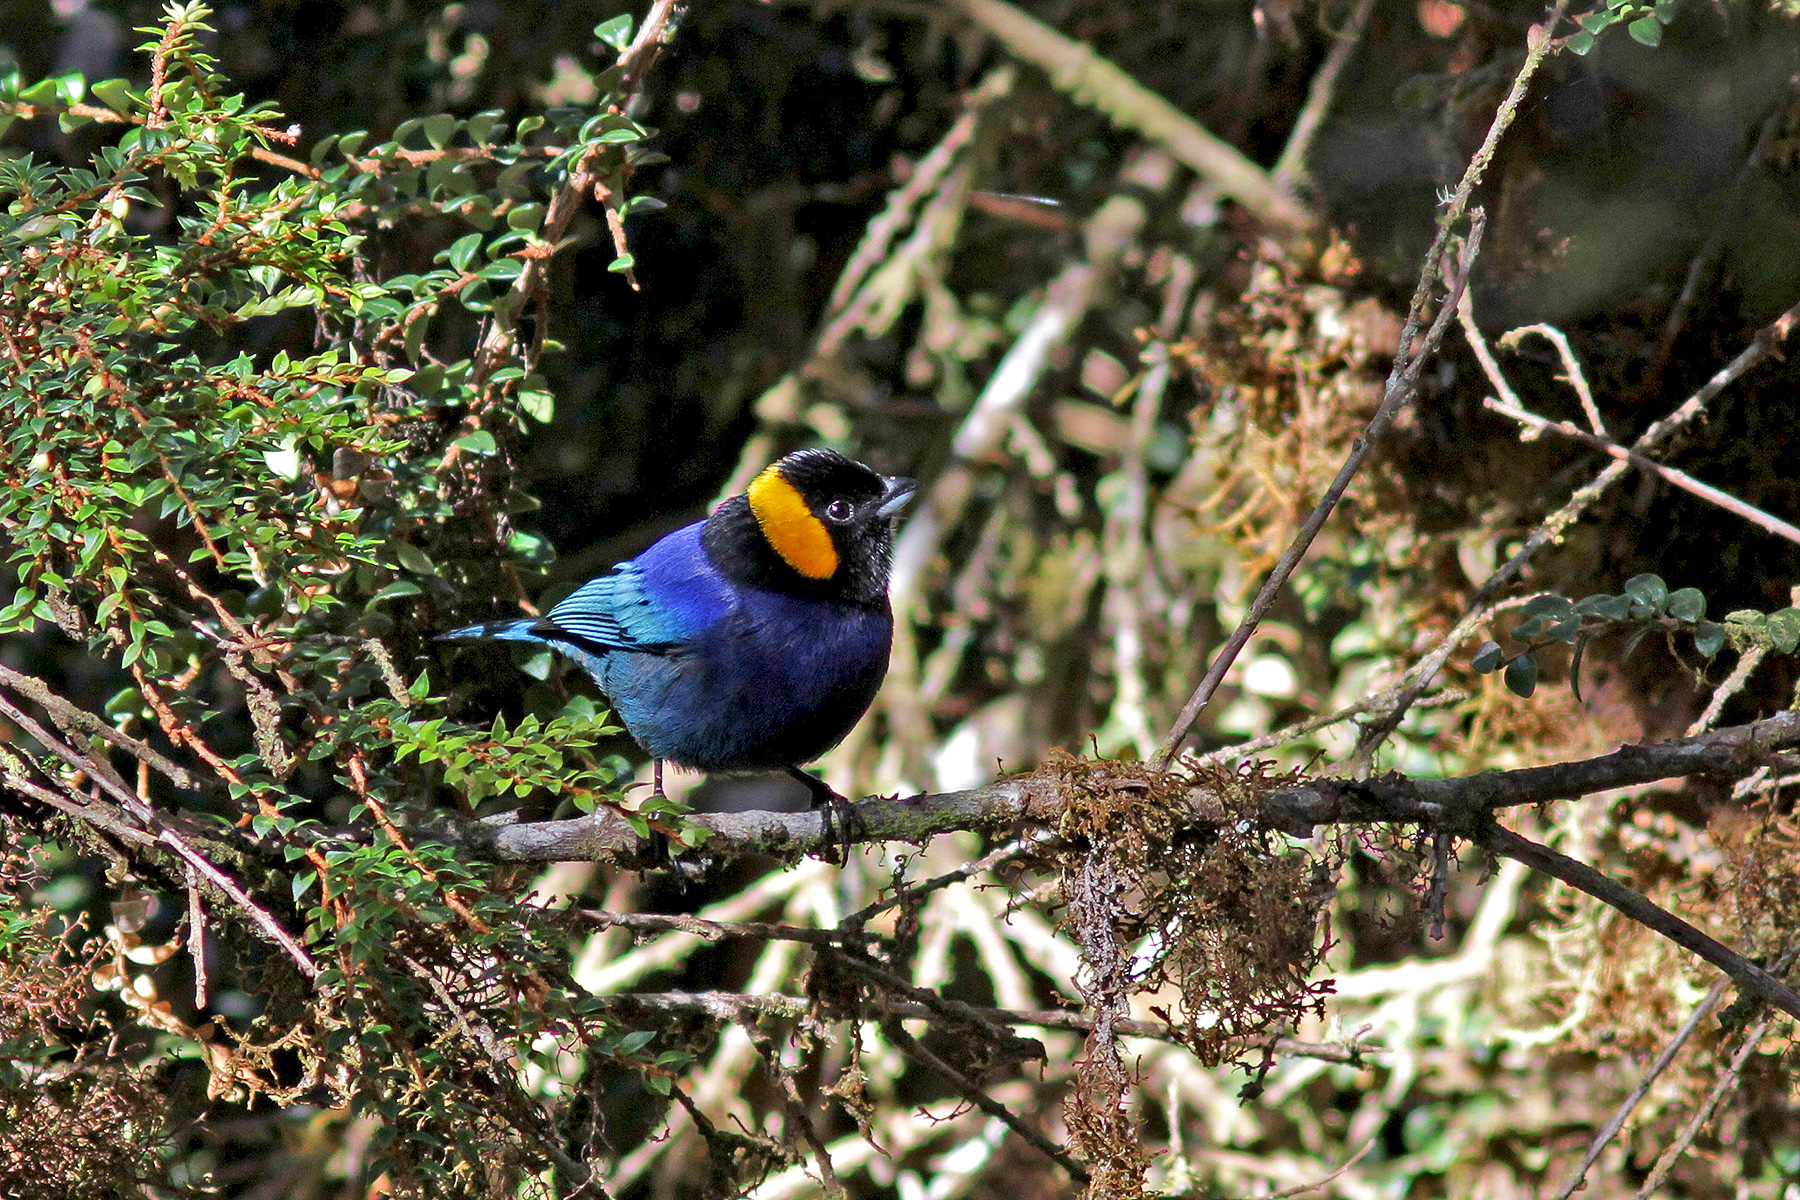 birding tours in peru